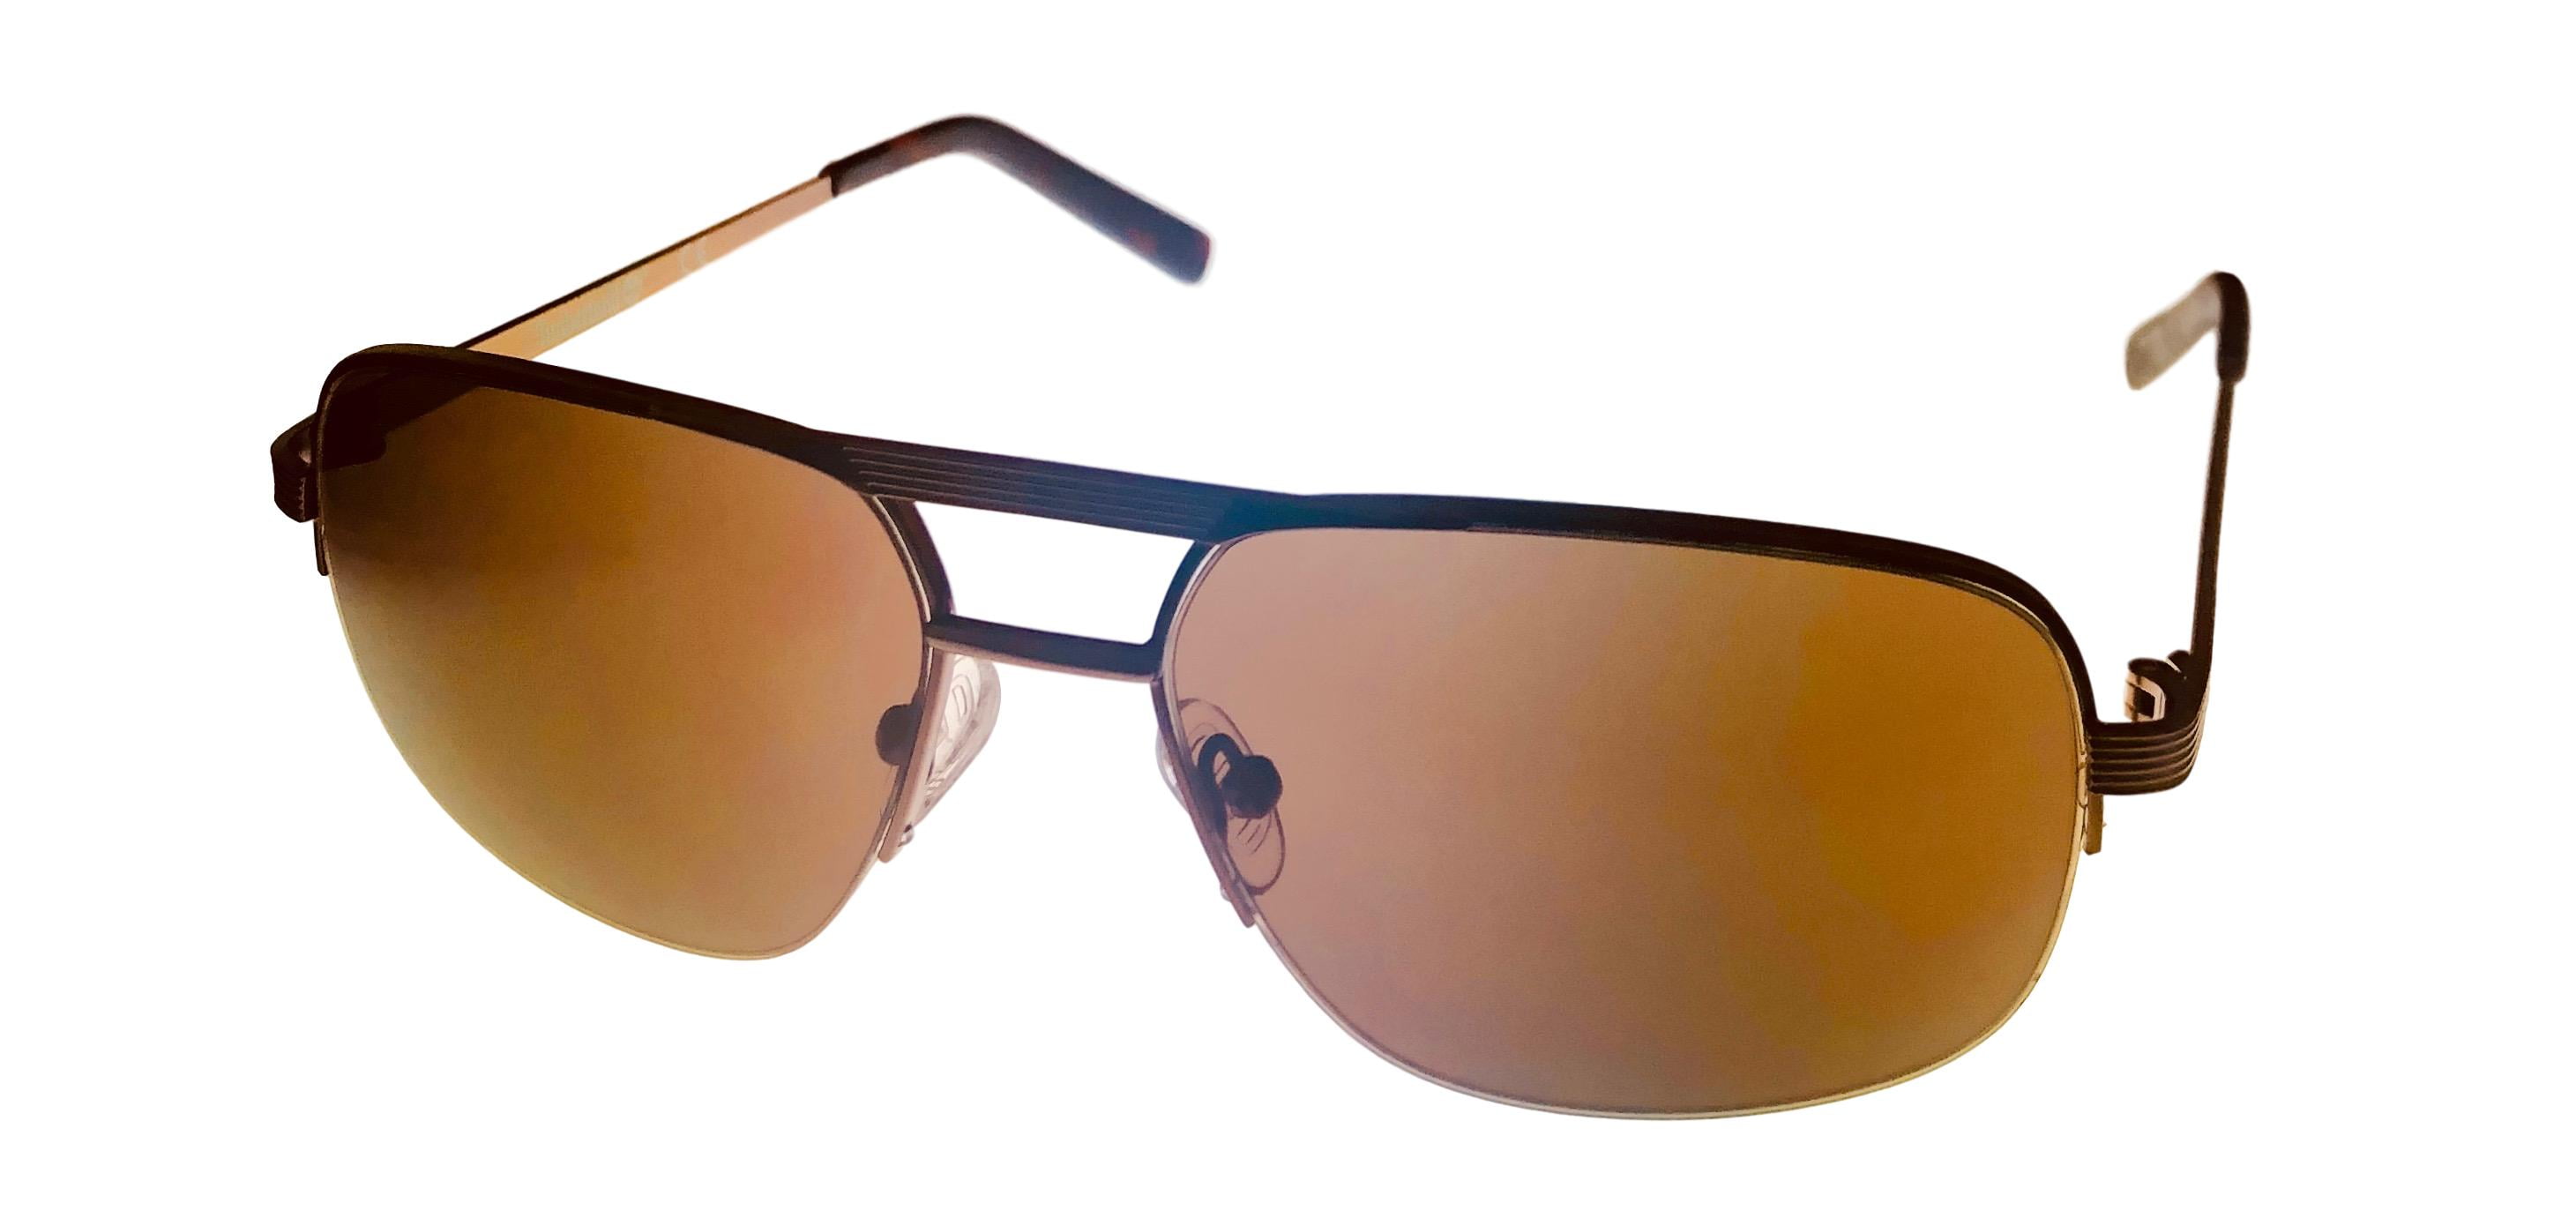 Buy Timberland Brown Frame Grey Lens Sunglasses - TB7153 56 52N (56) online